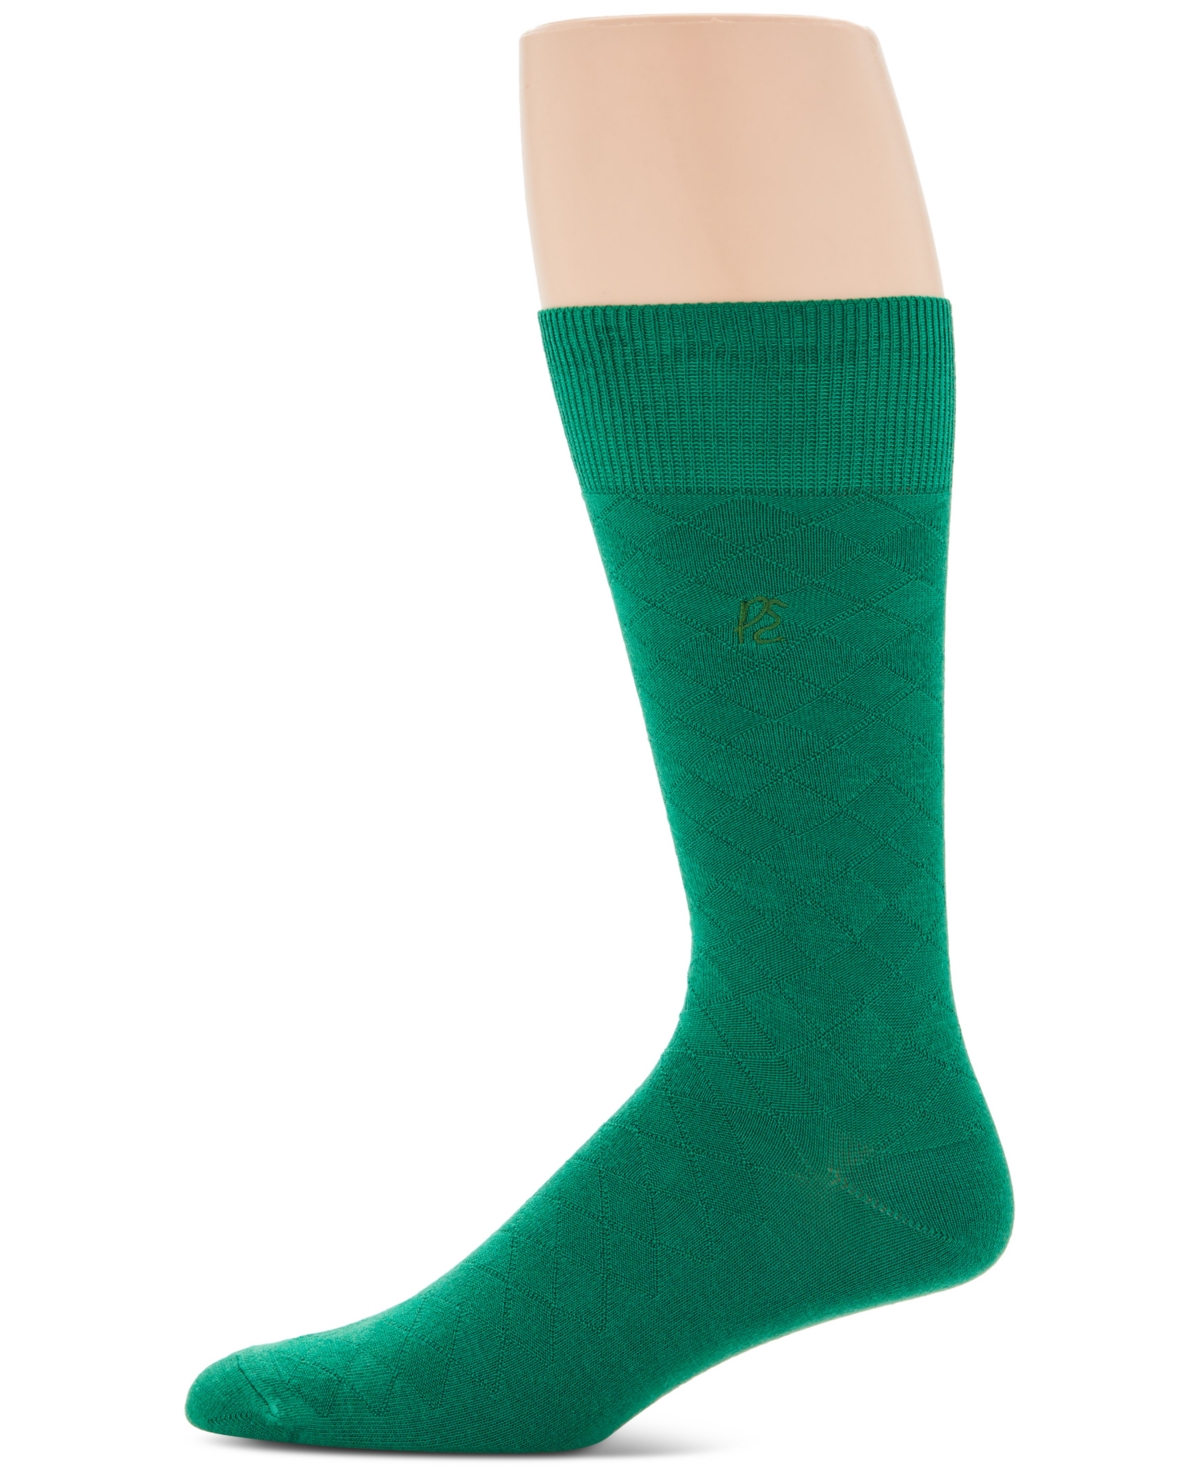 Men's Diamond Stitch Socks - 1 pk. - Green